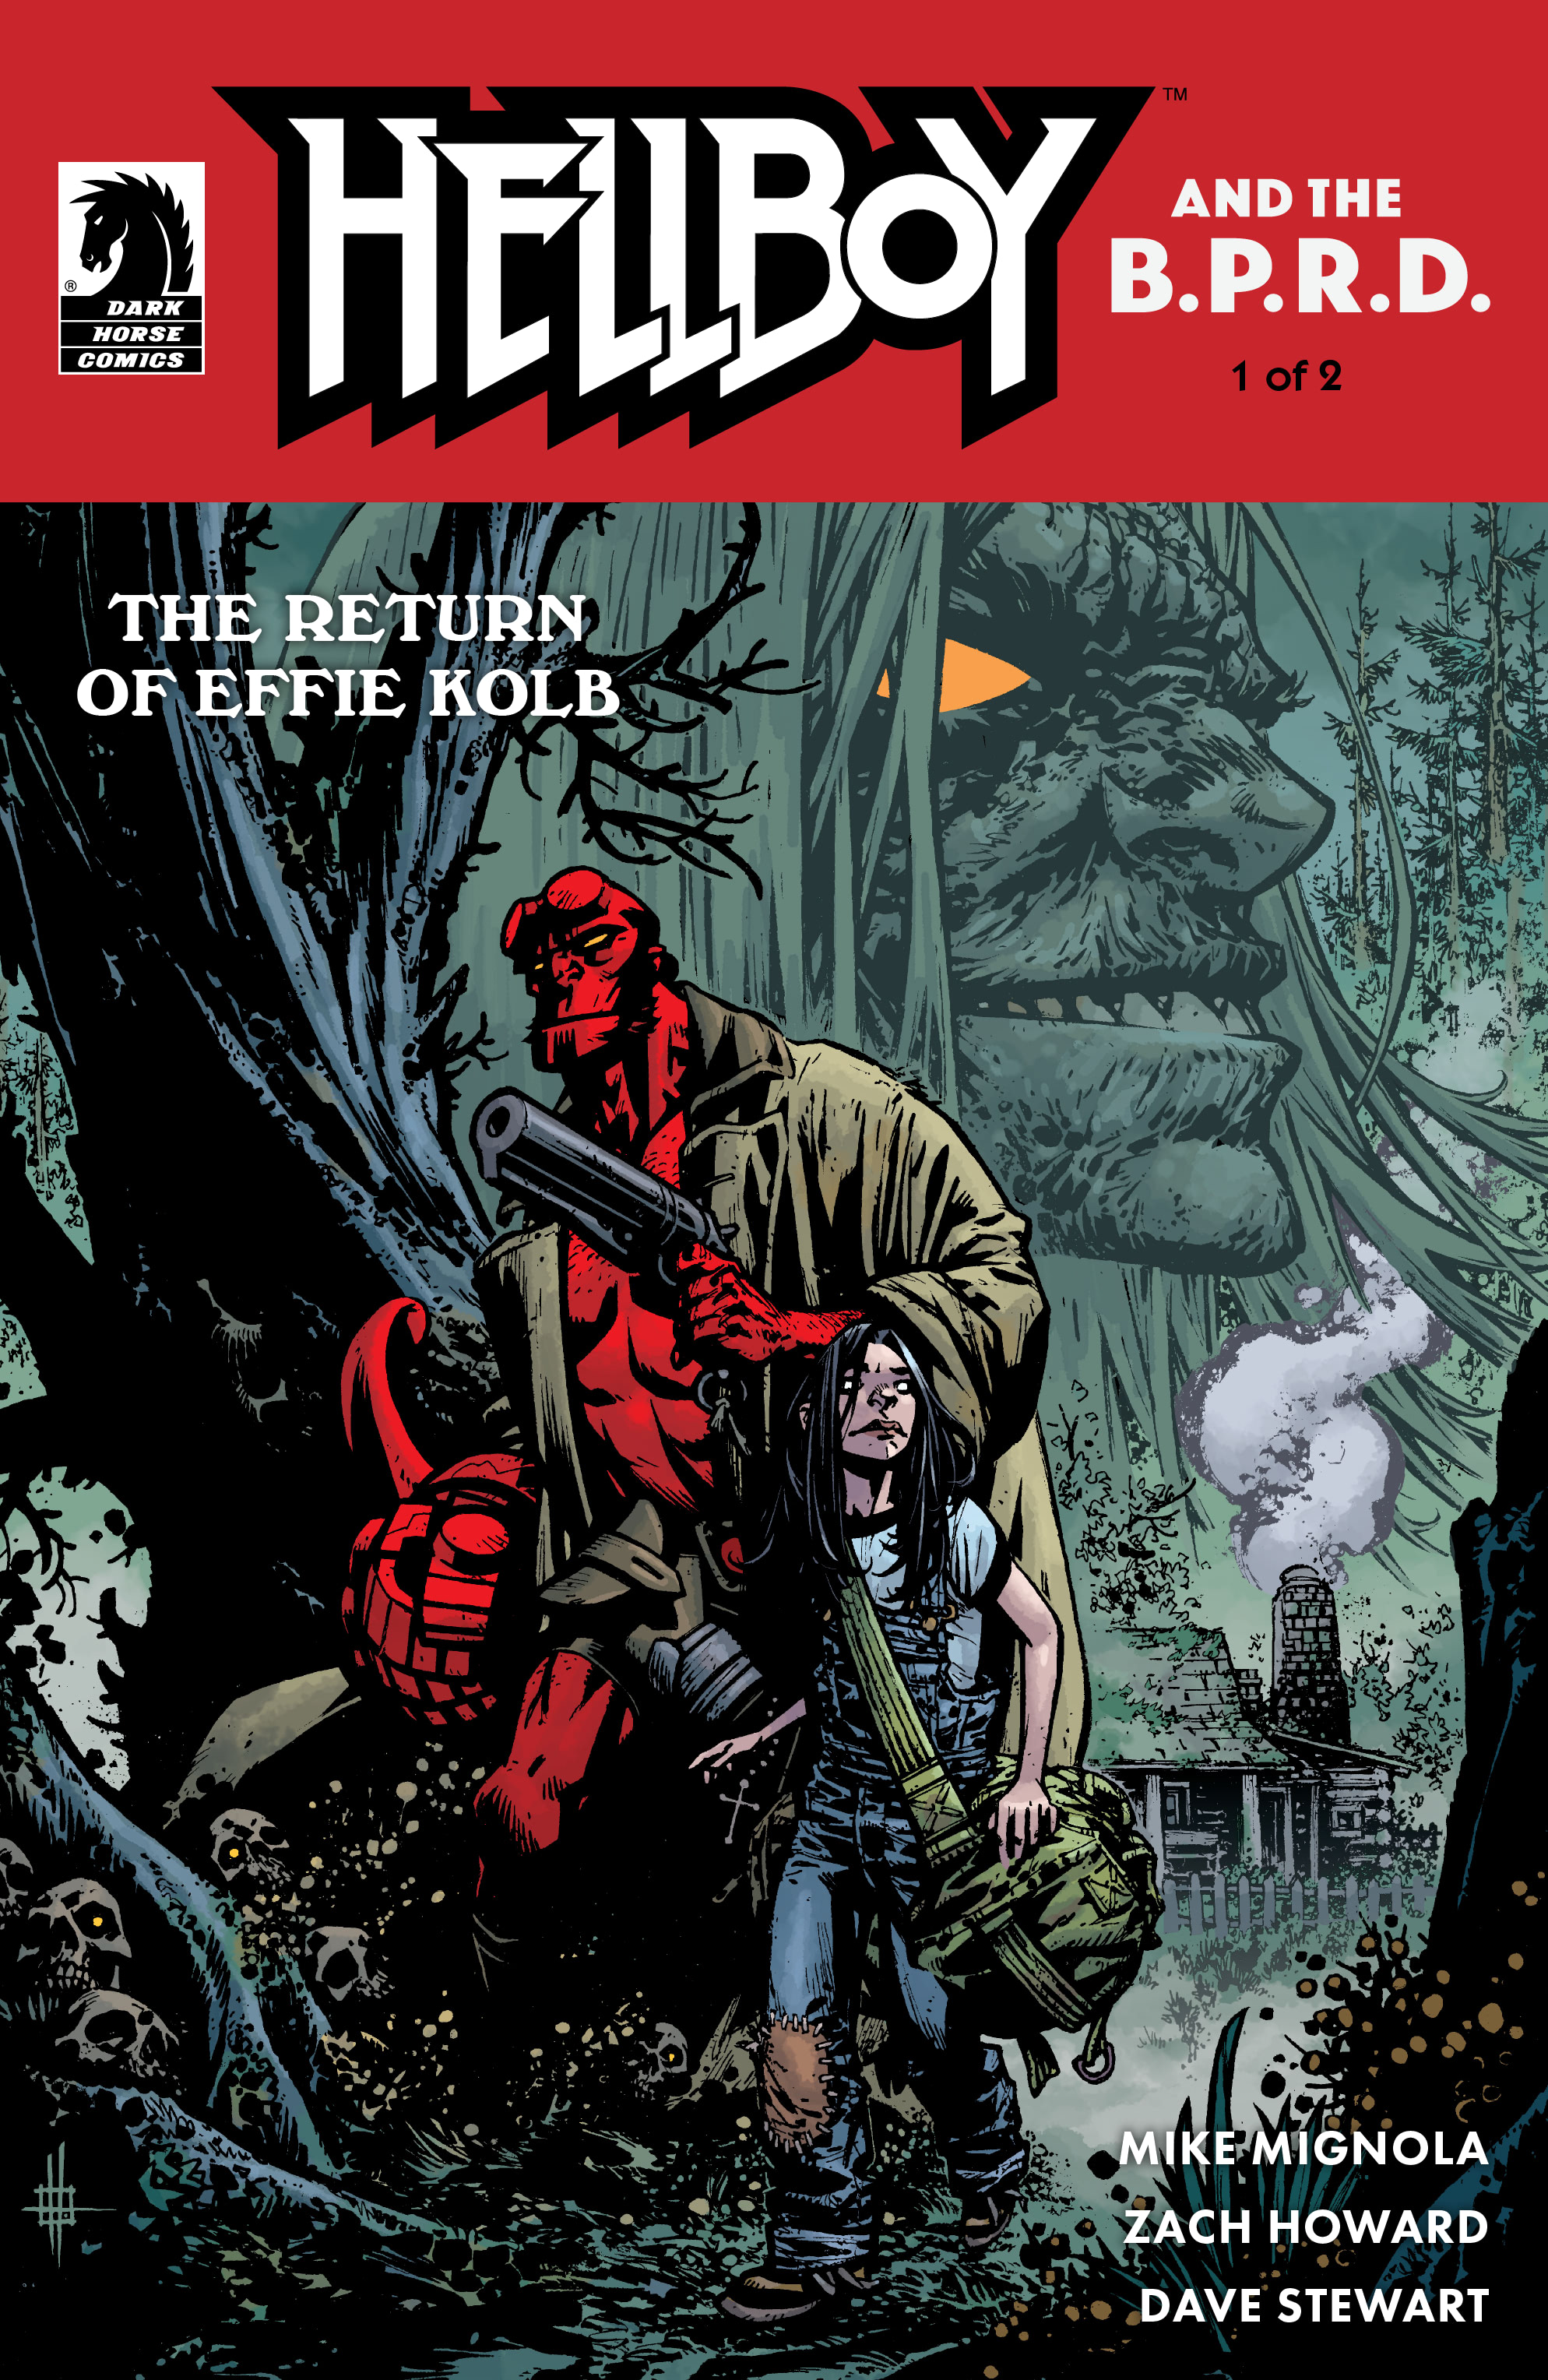 Hellboy and the B.P.R.D.: The Return of Effie Kolb Nr 2020 Neuware 2 new